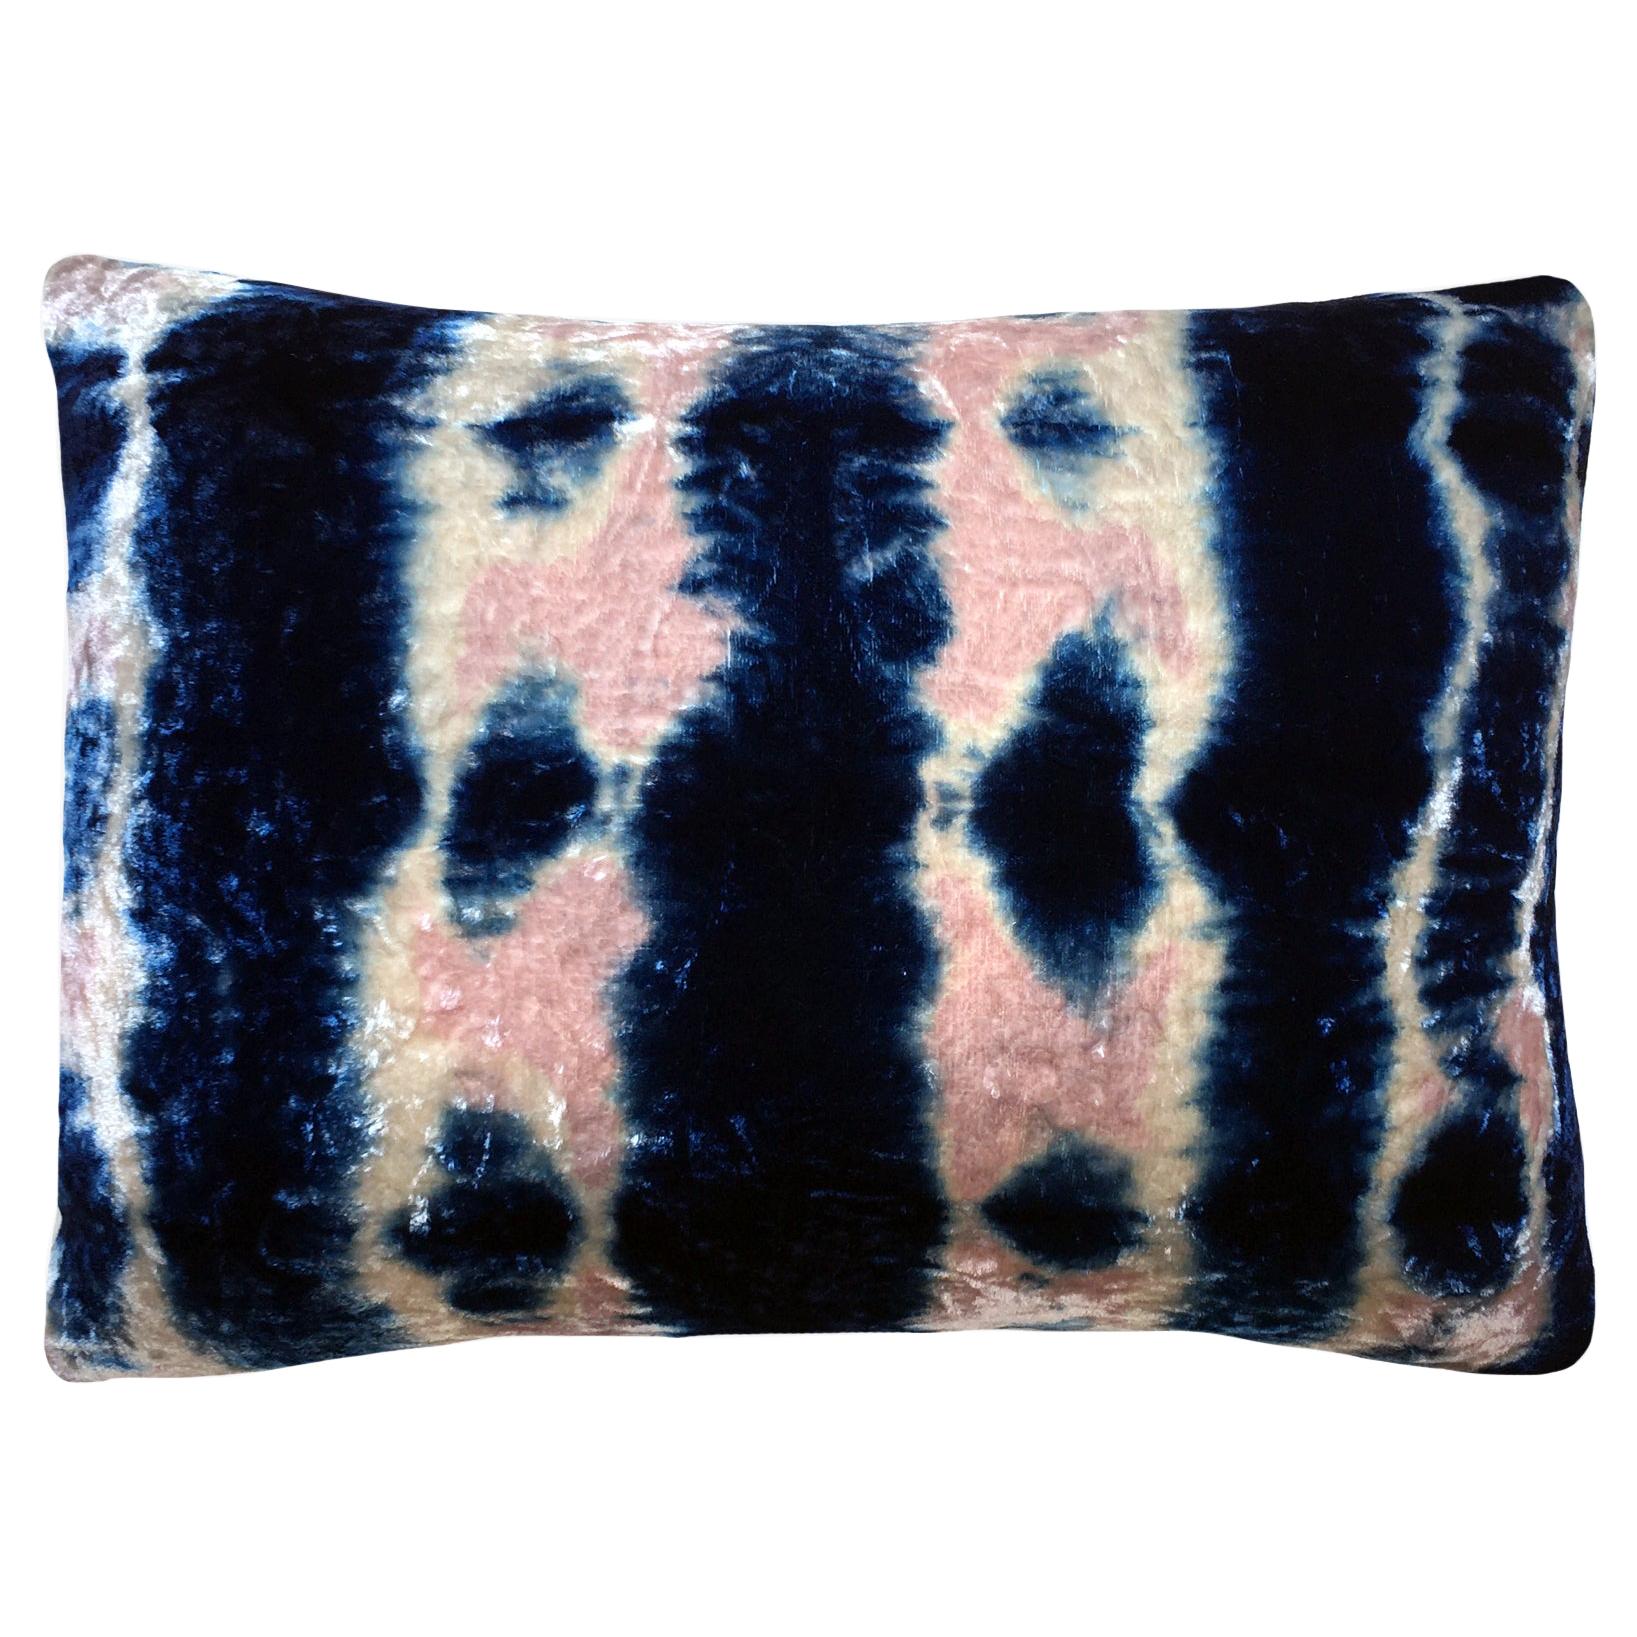 Hand-dyed Velvet Throw Pillow in Rose Pink & Indigo Blue Morse Pattern